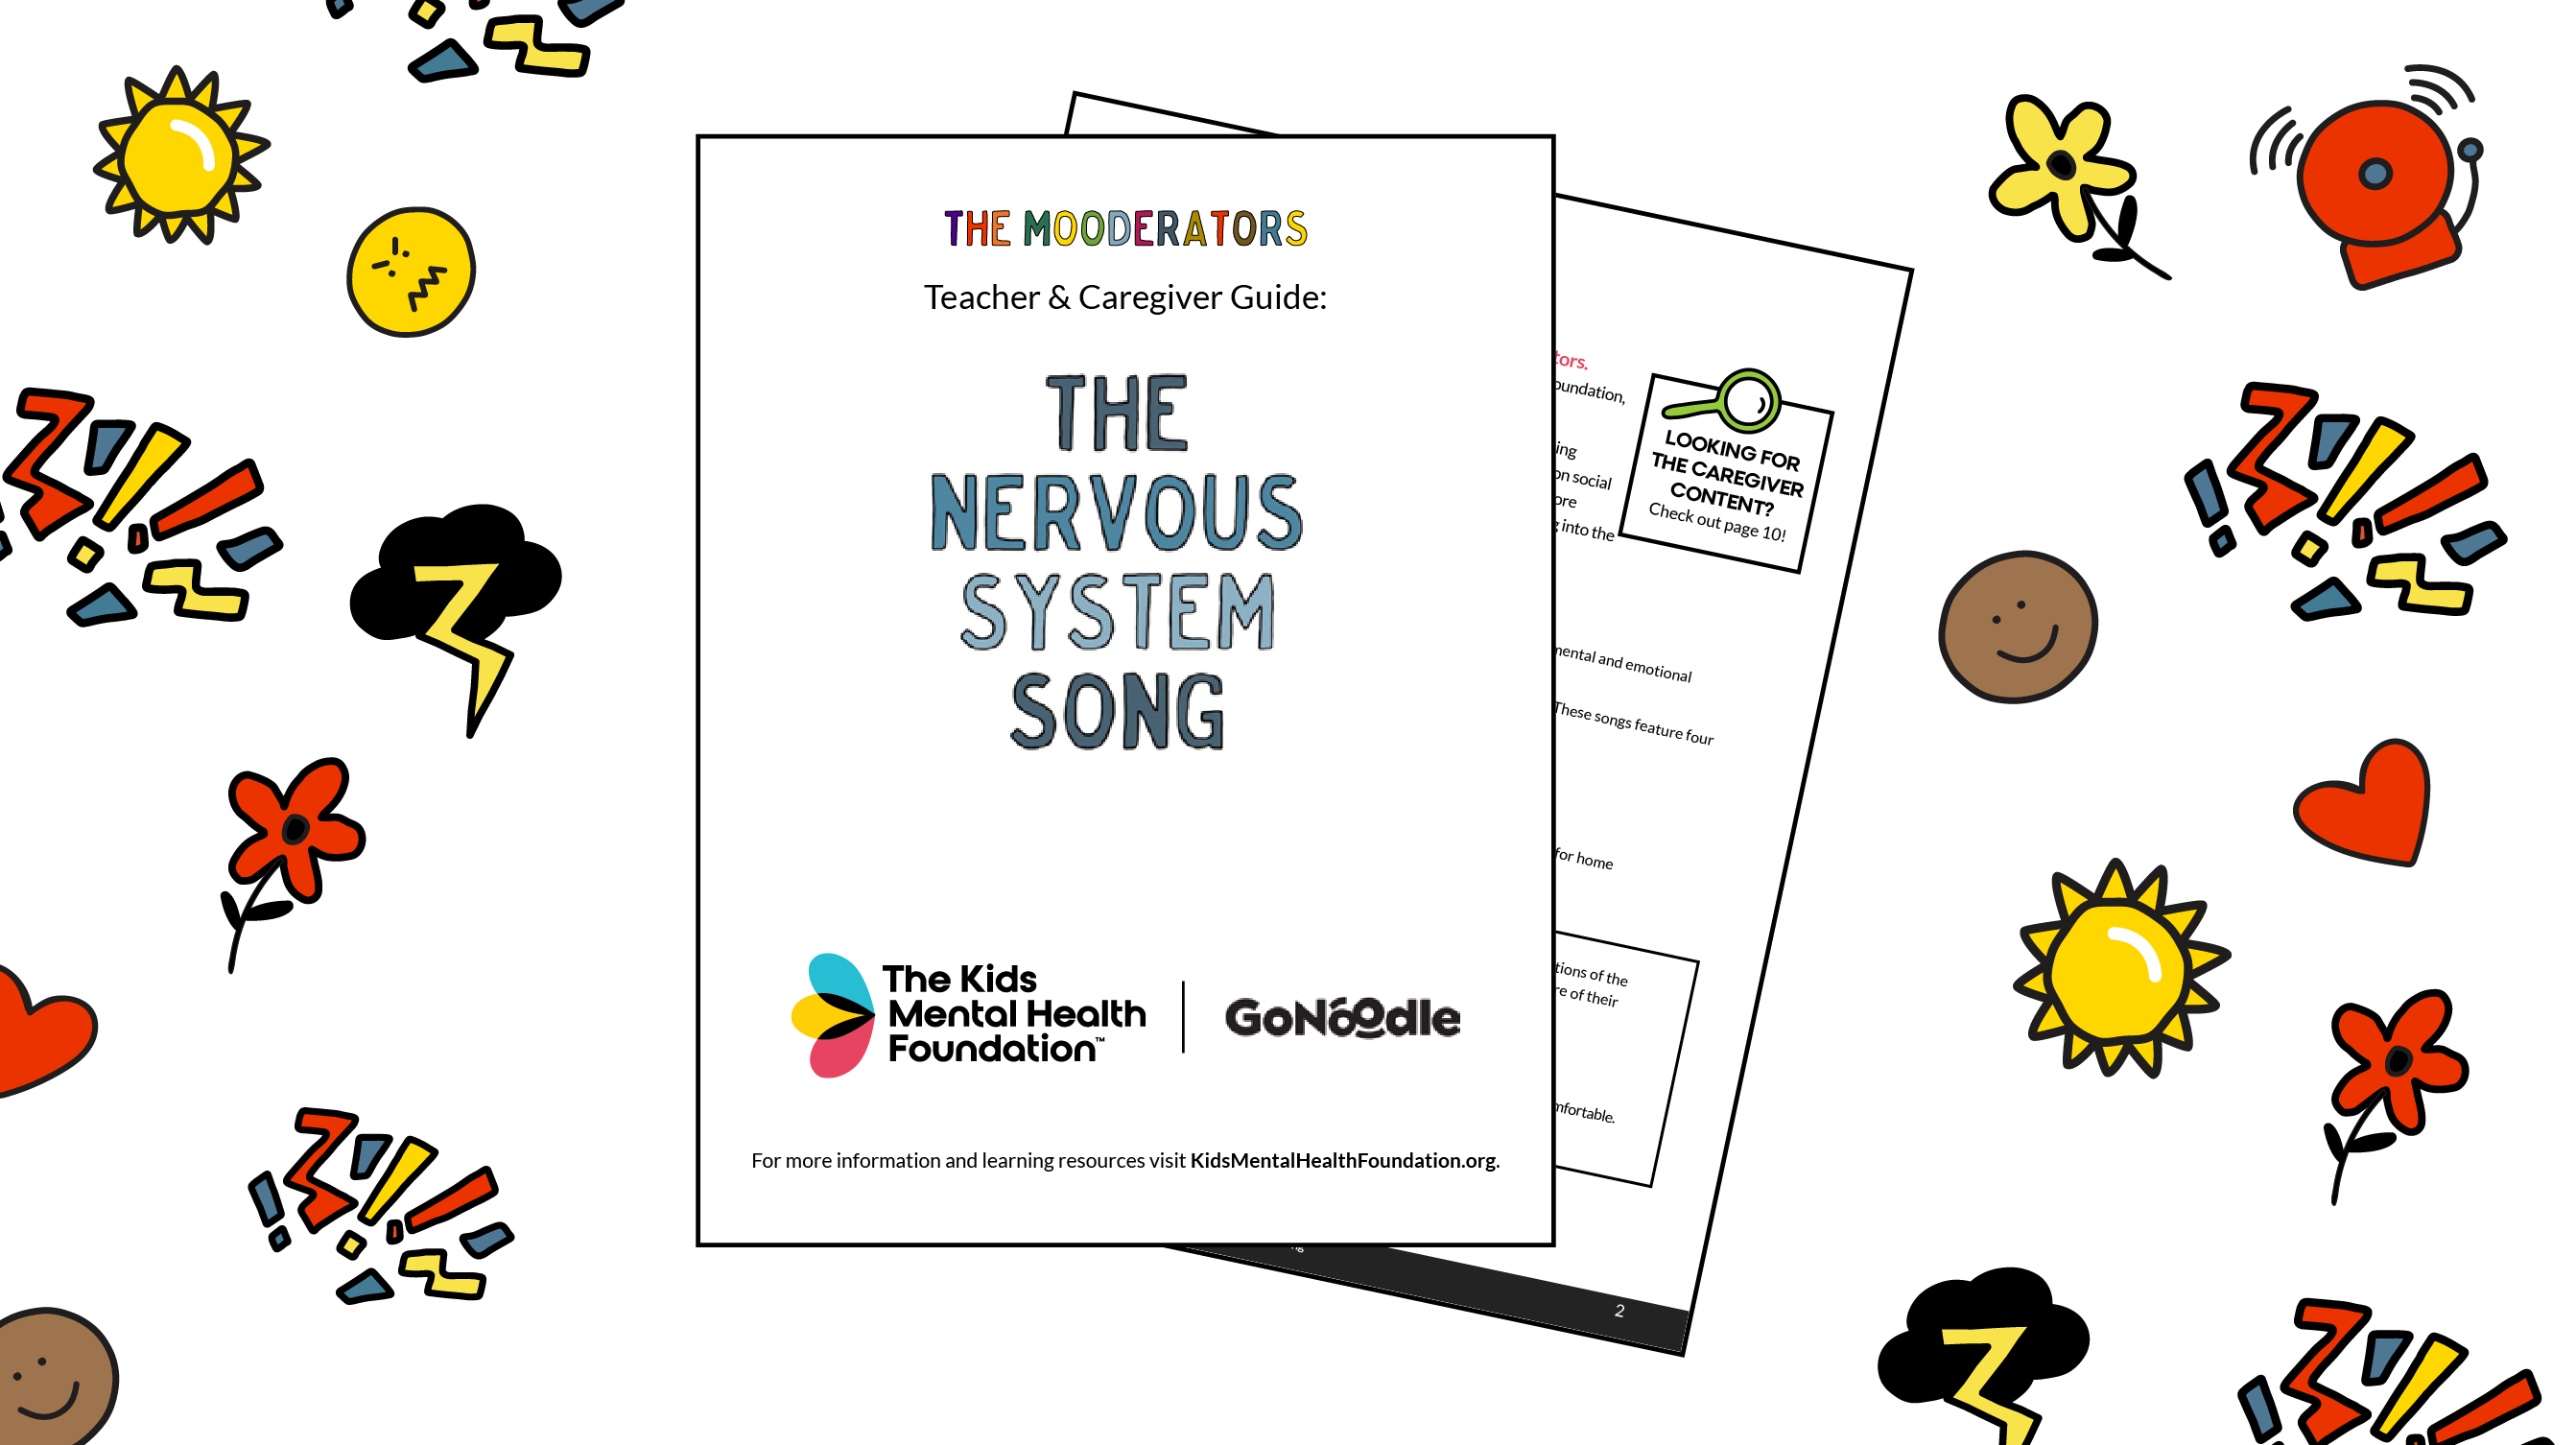 The Nervous System Song: Teacher & Caregiver Guide